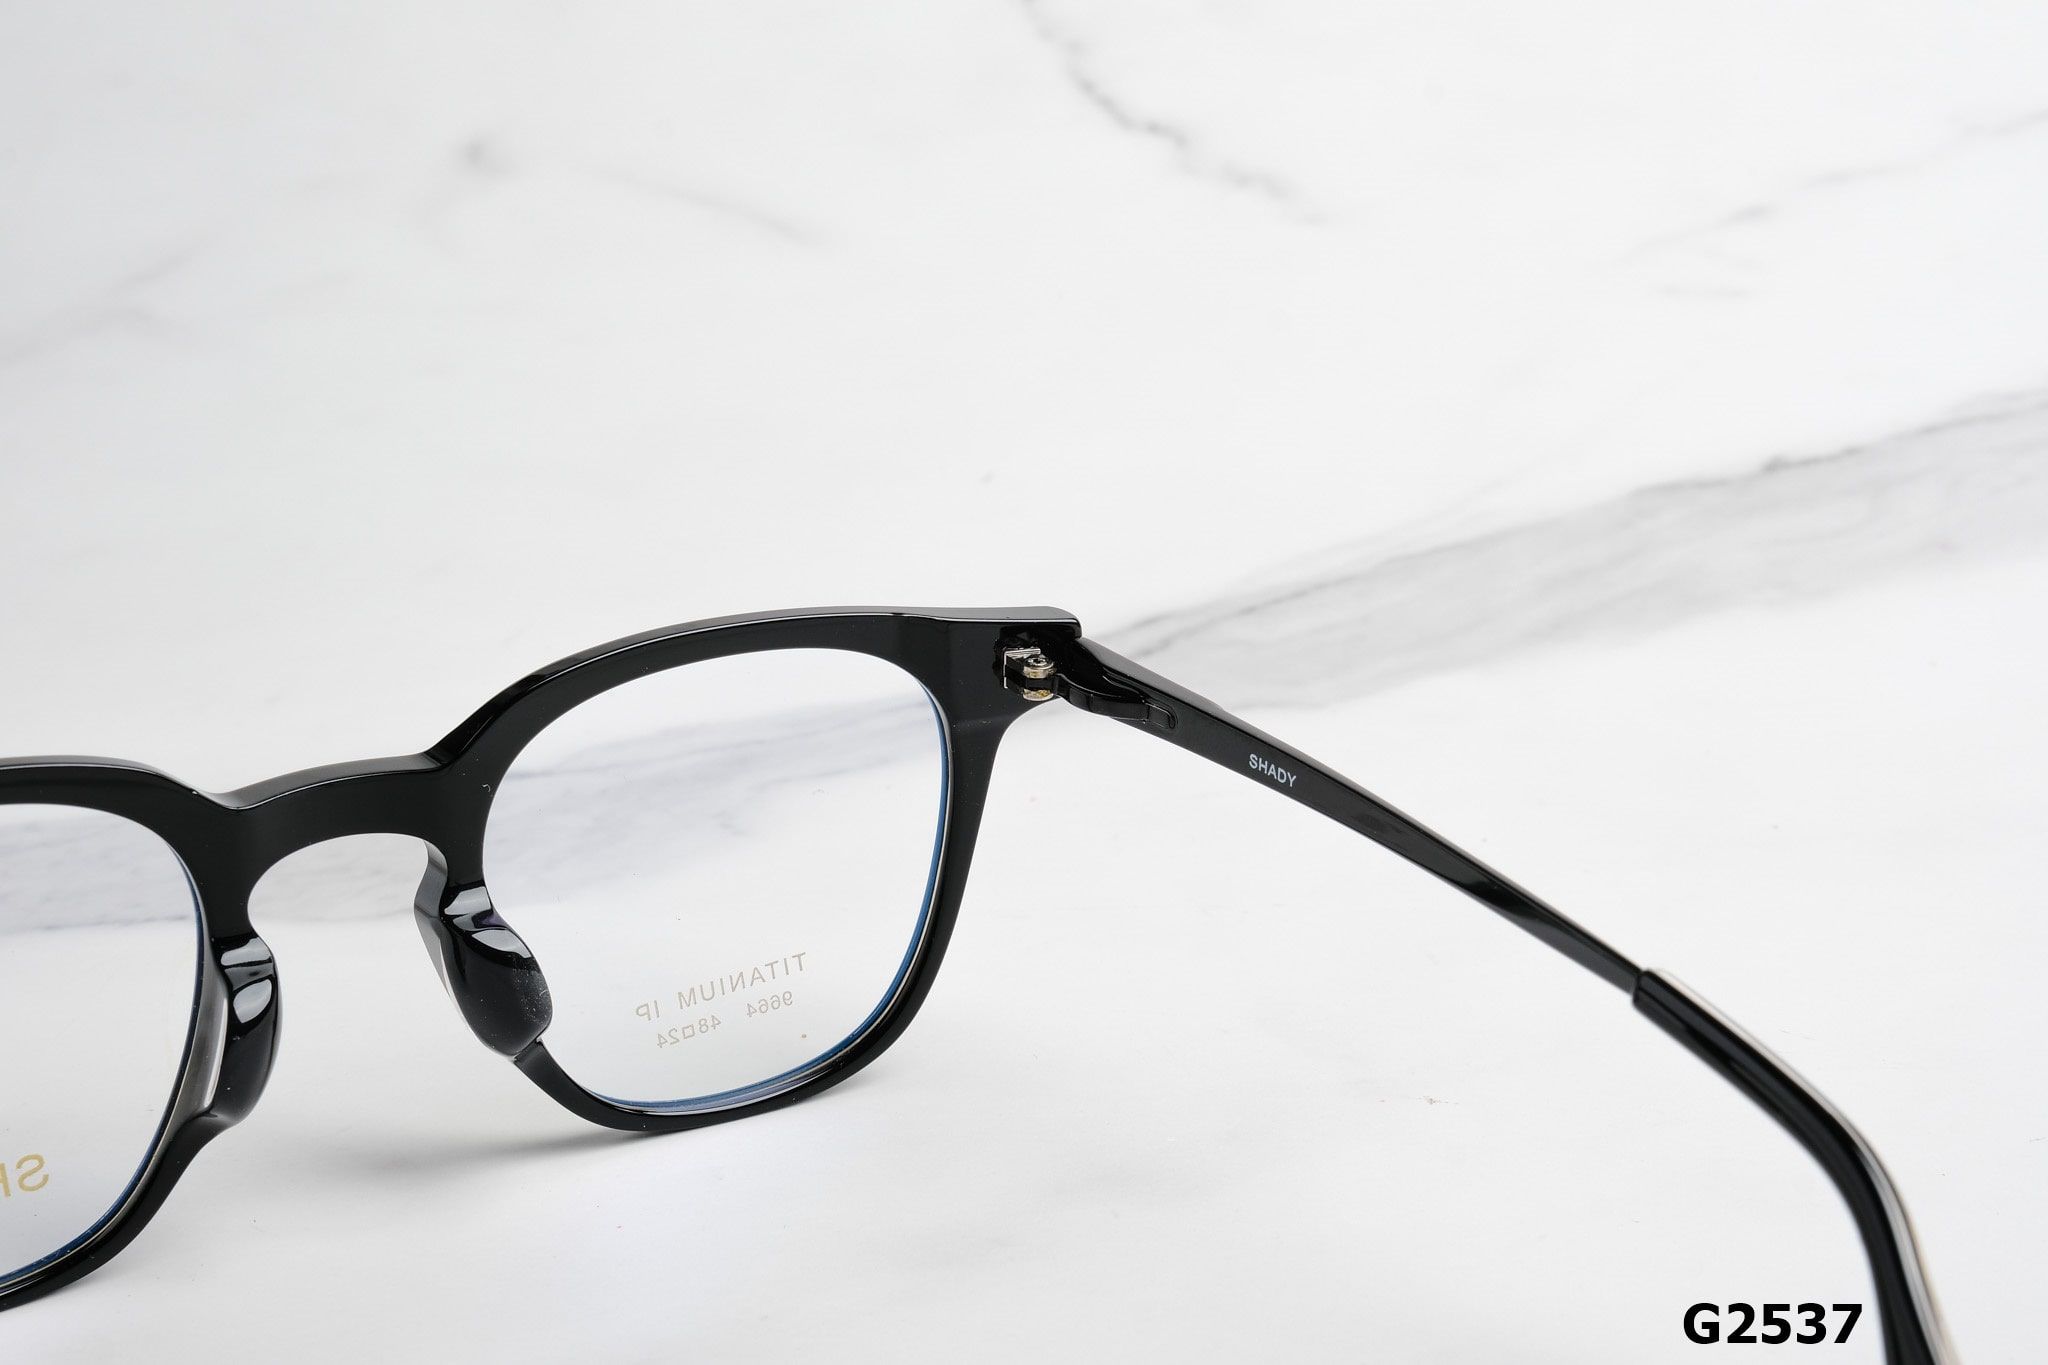  SHADY Eyewear - Glasses - G2537 